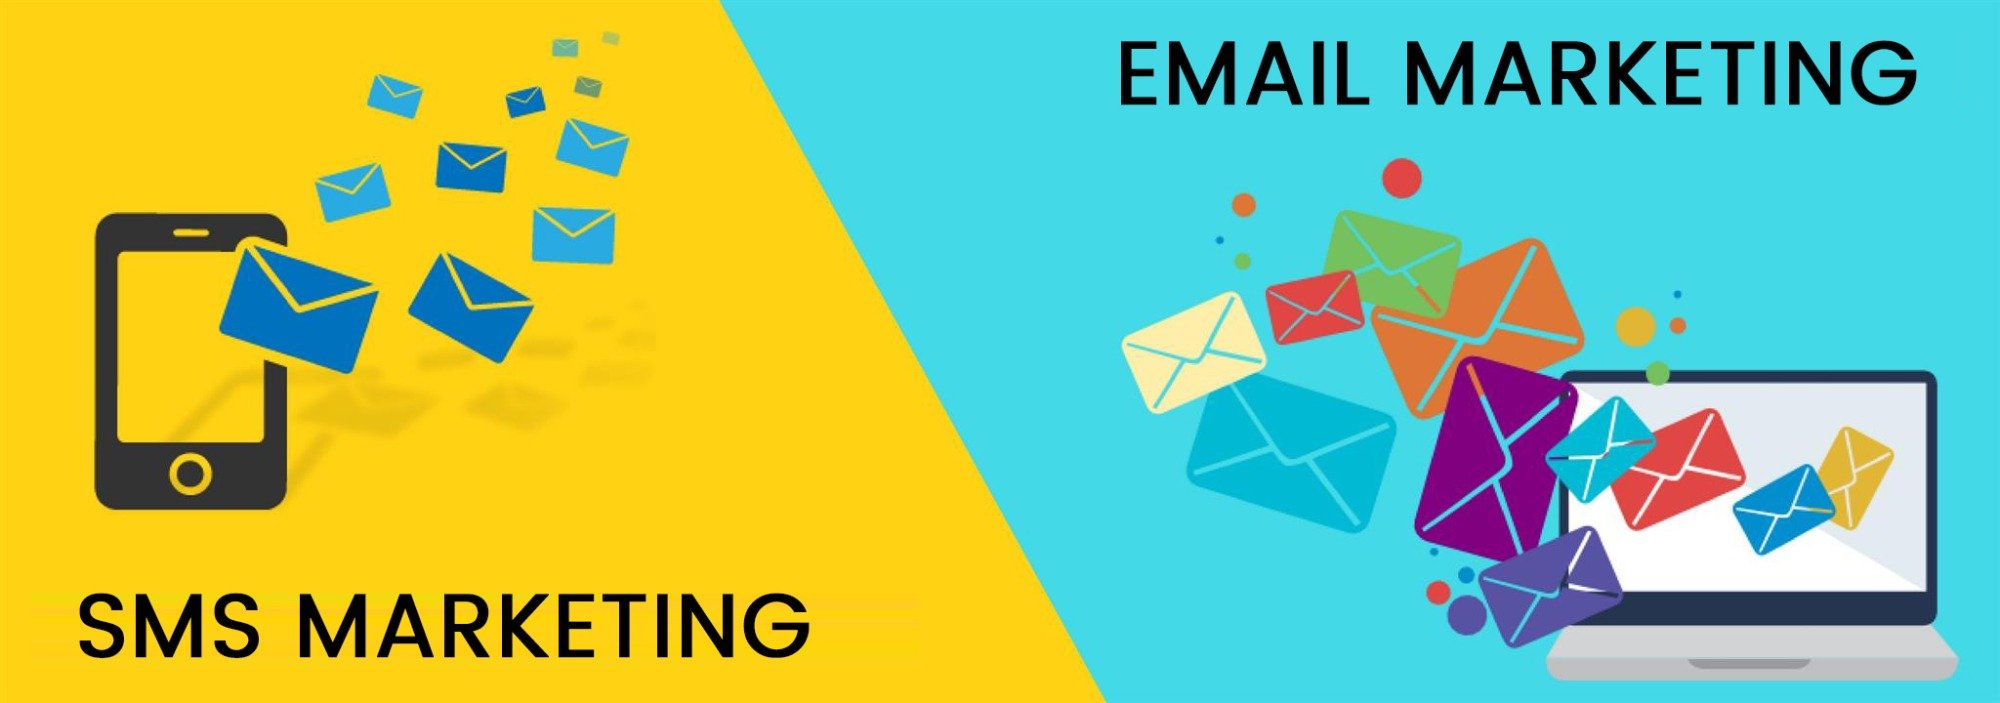 SMS Marketing Email Marketing